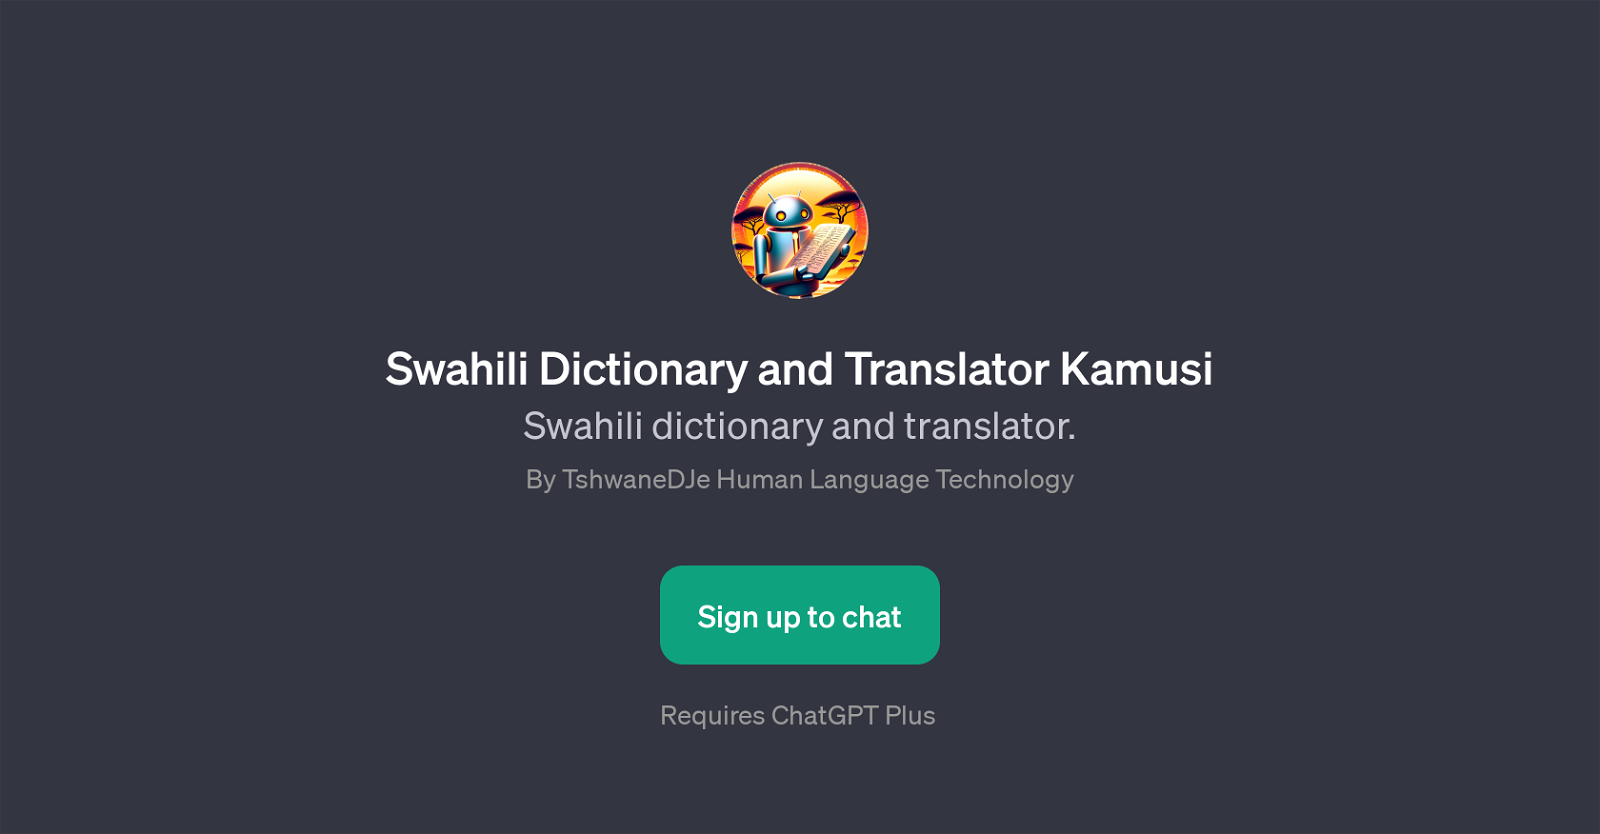 Swahili Dictionary and Translator Kamusi website